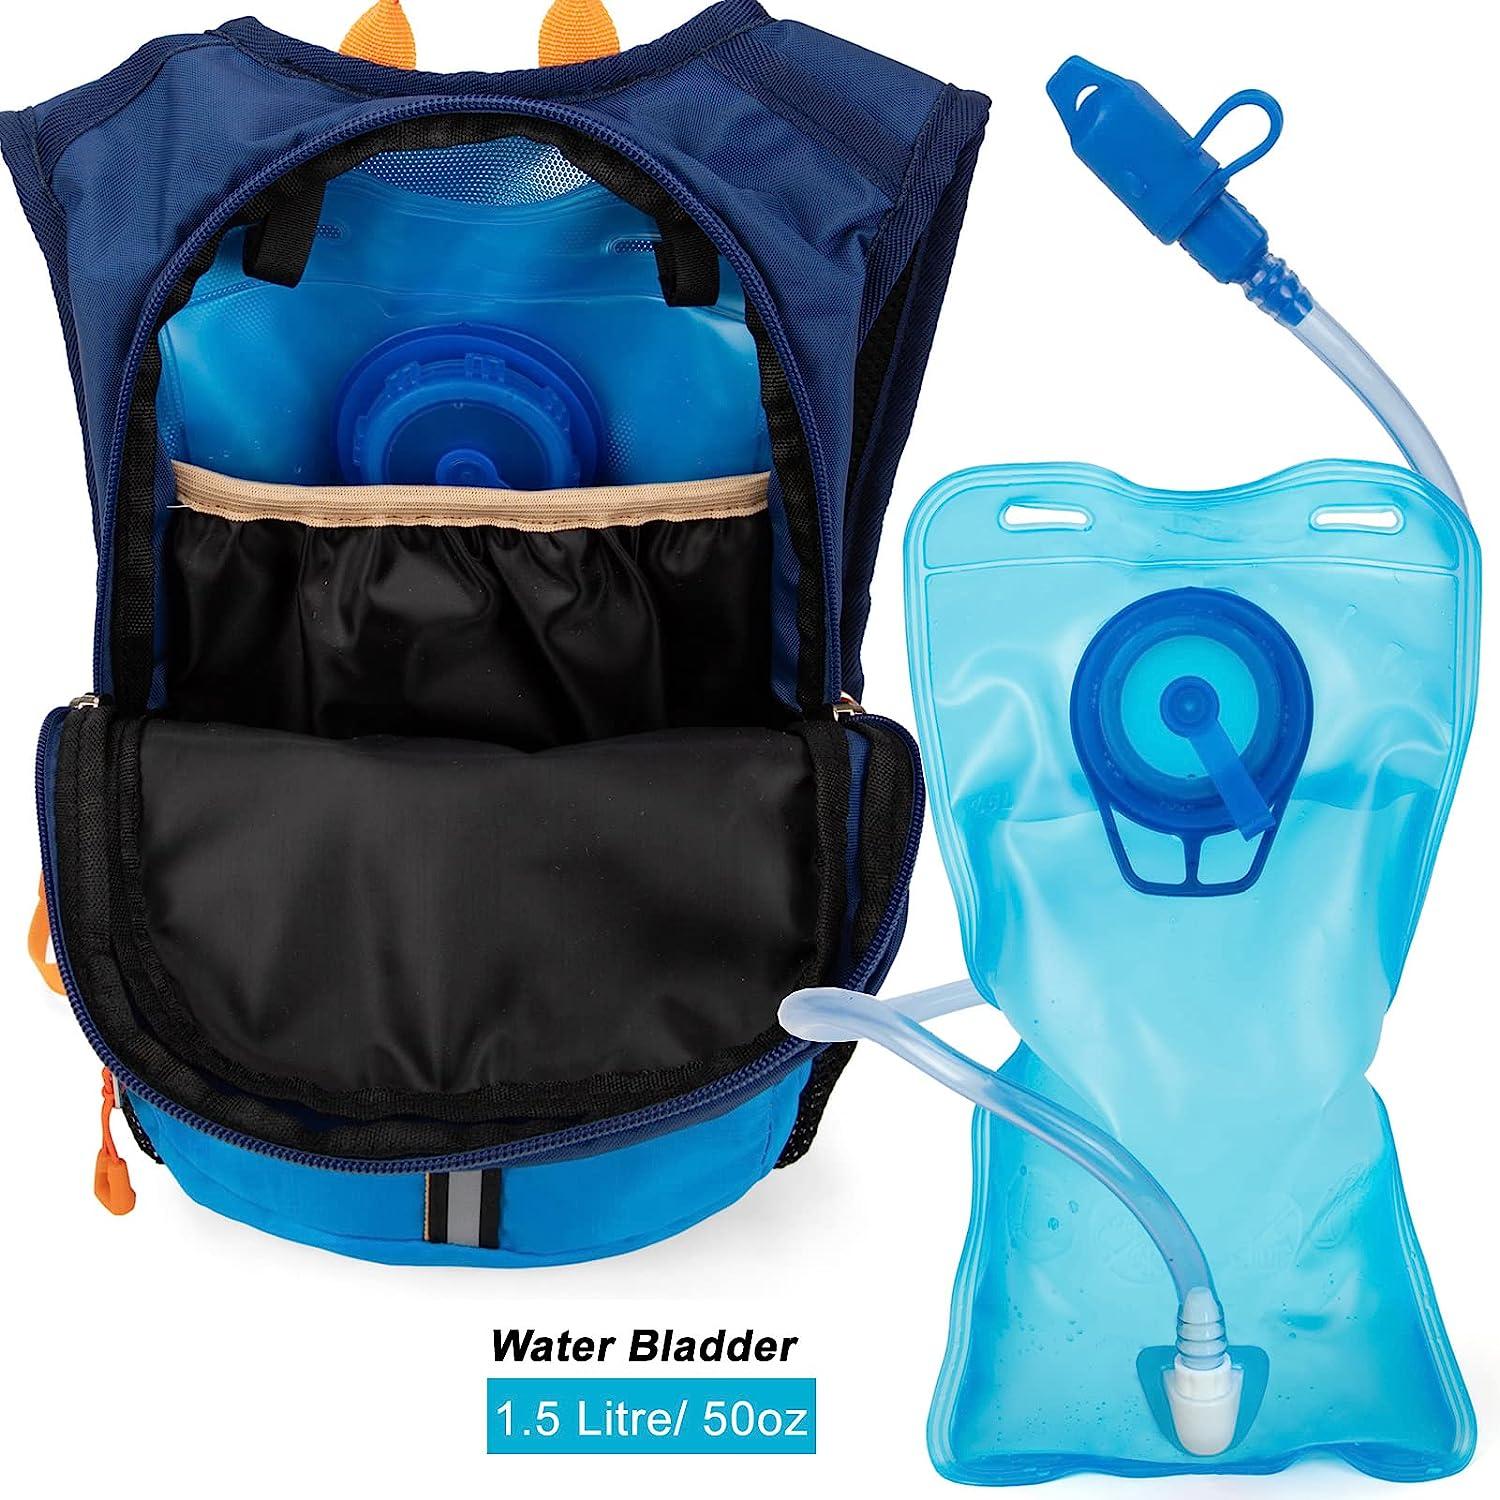 Ivygreen Kids Hydration Backpack, Hiking Backpack for Boys or Girls with  1.5L Water Bladder Blue